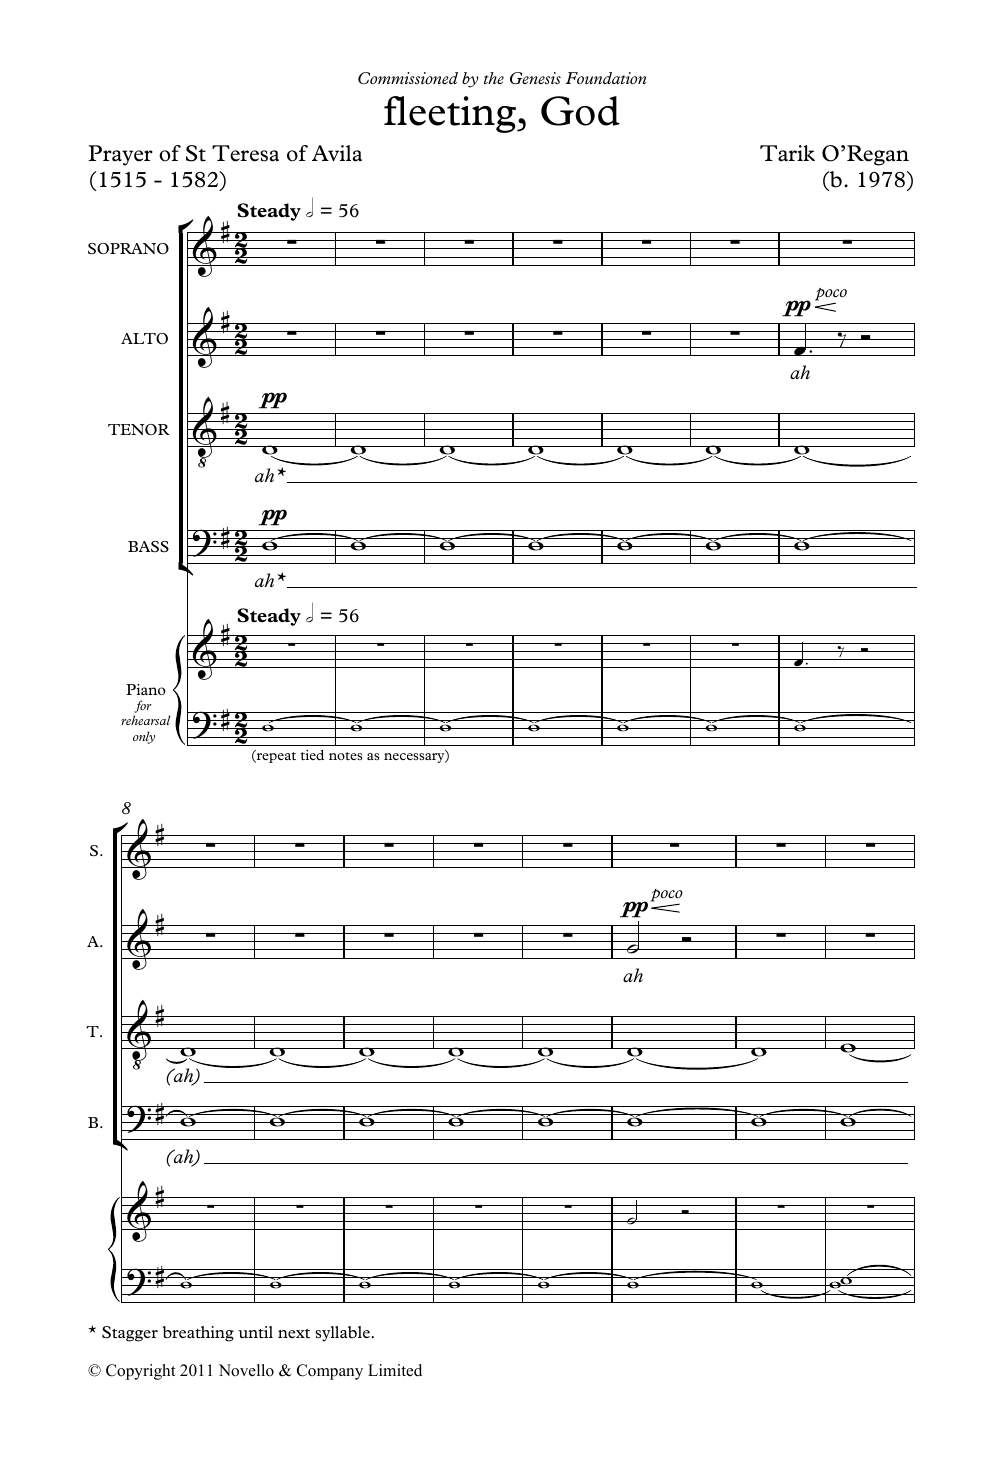 Tarik O'Regan Fleeting, God Sheet Music Notes & Chords for SATB Choir - Download or Print PDF